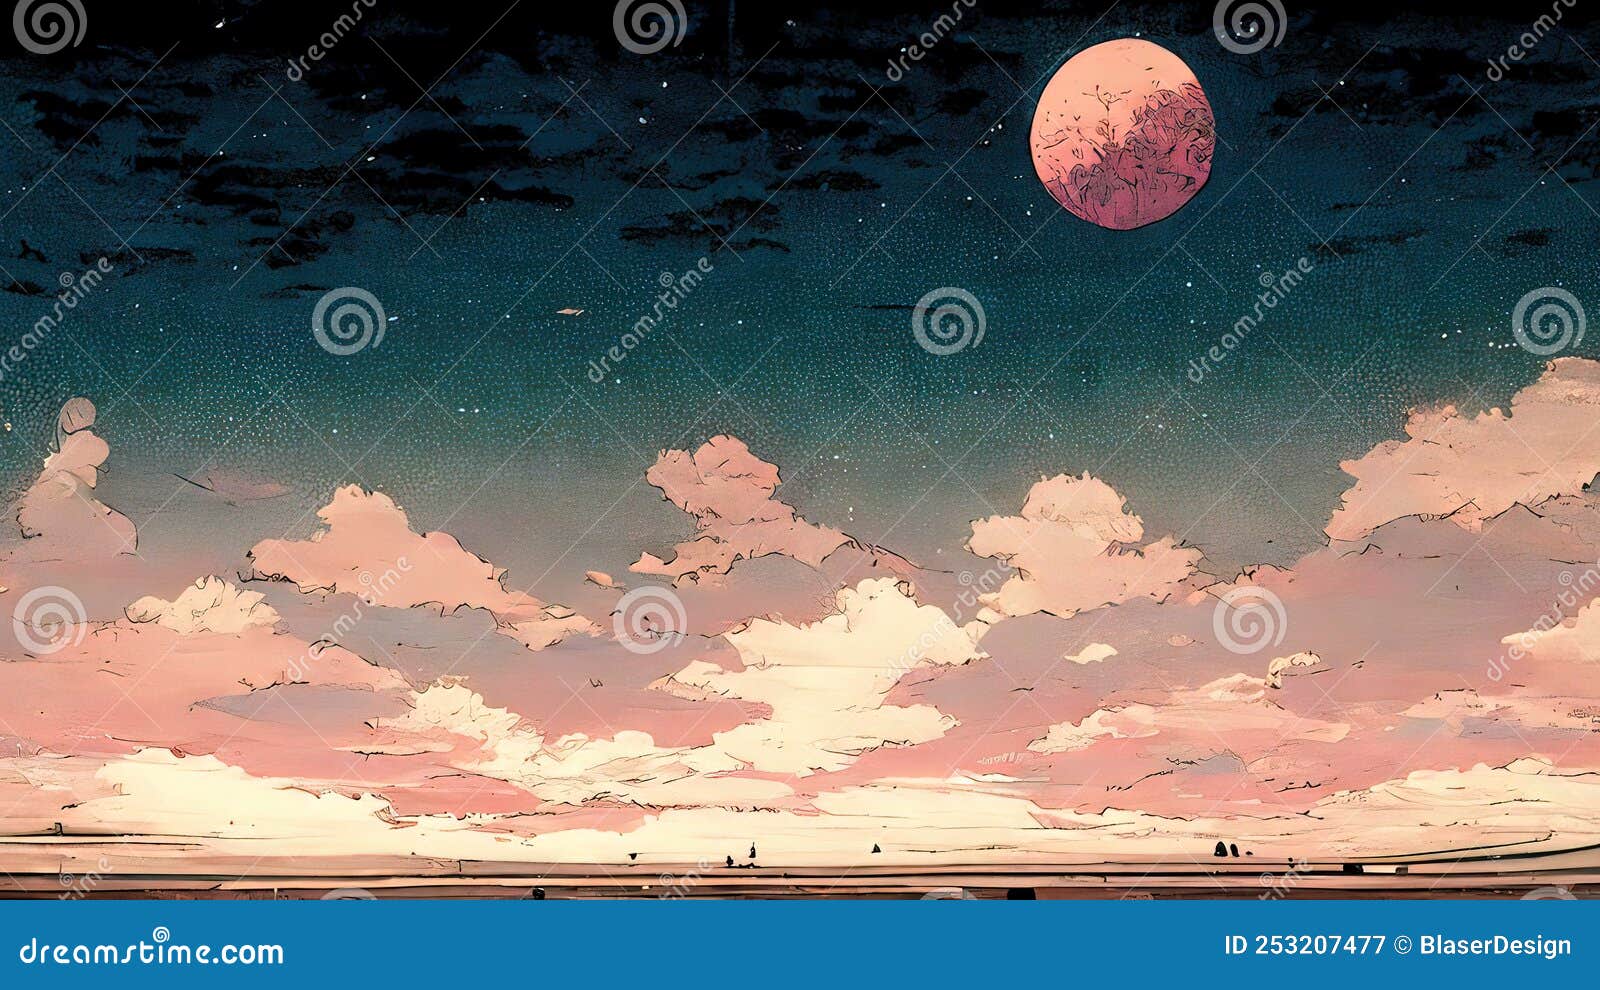 moody wallpaper,natural landscape,nature,sky,tree,atmospheric phenomenon  (#998957) - WallpaperUse